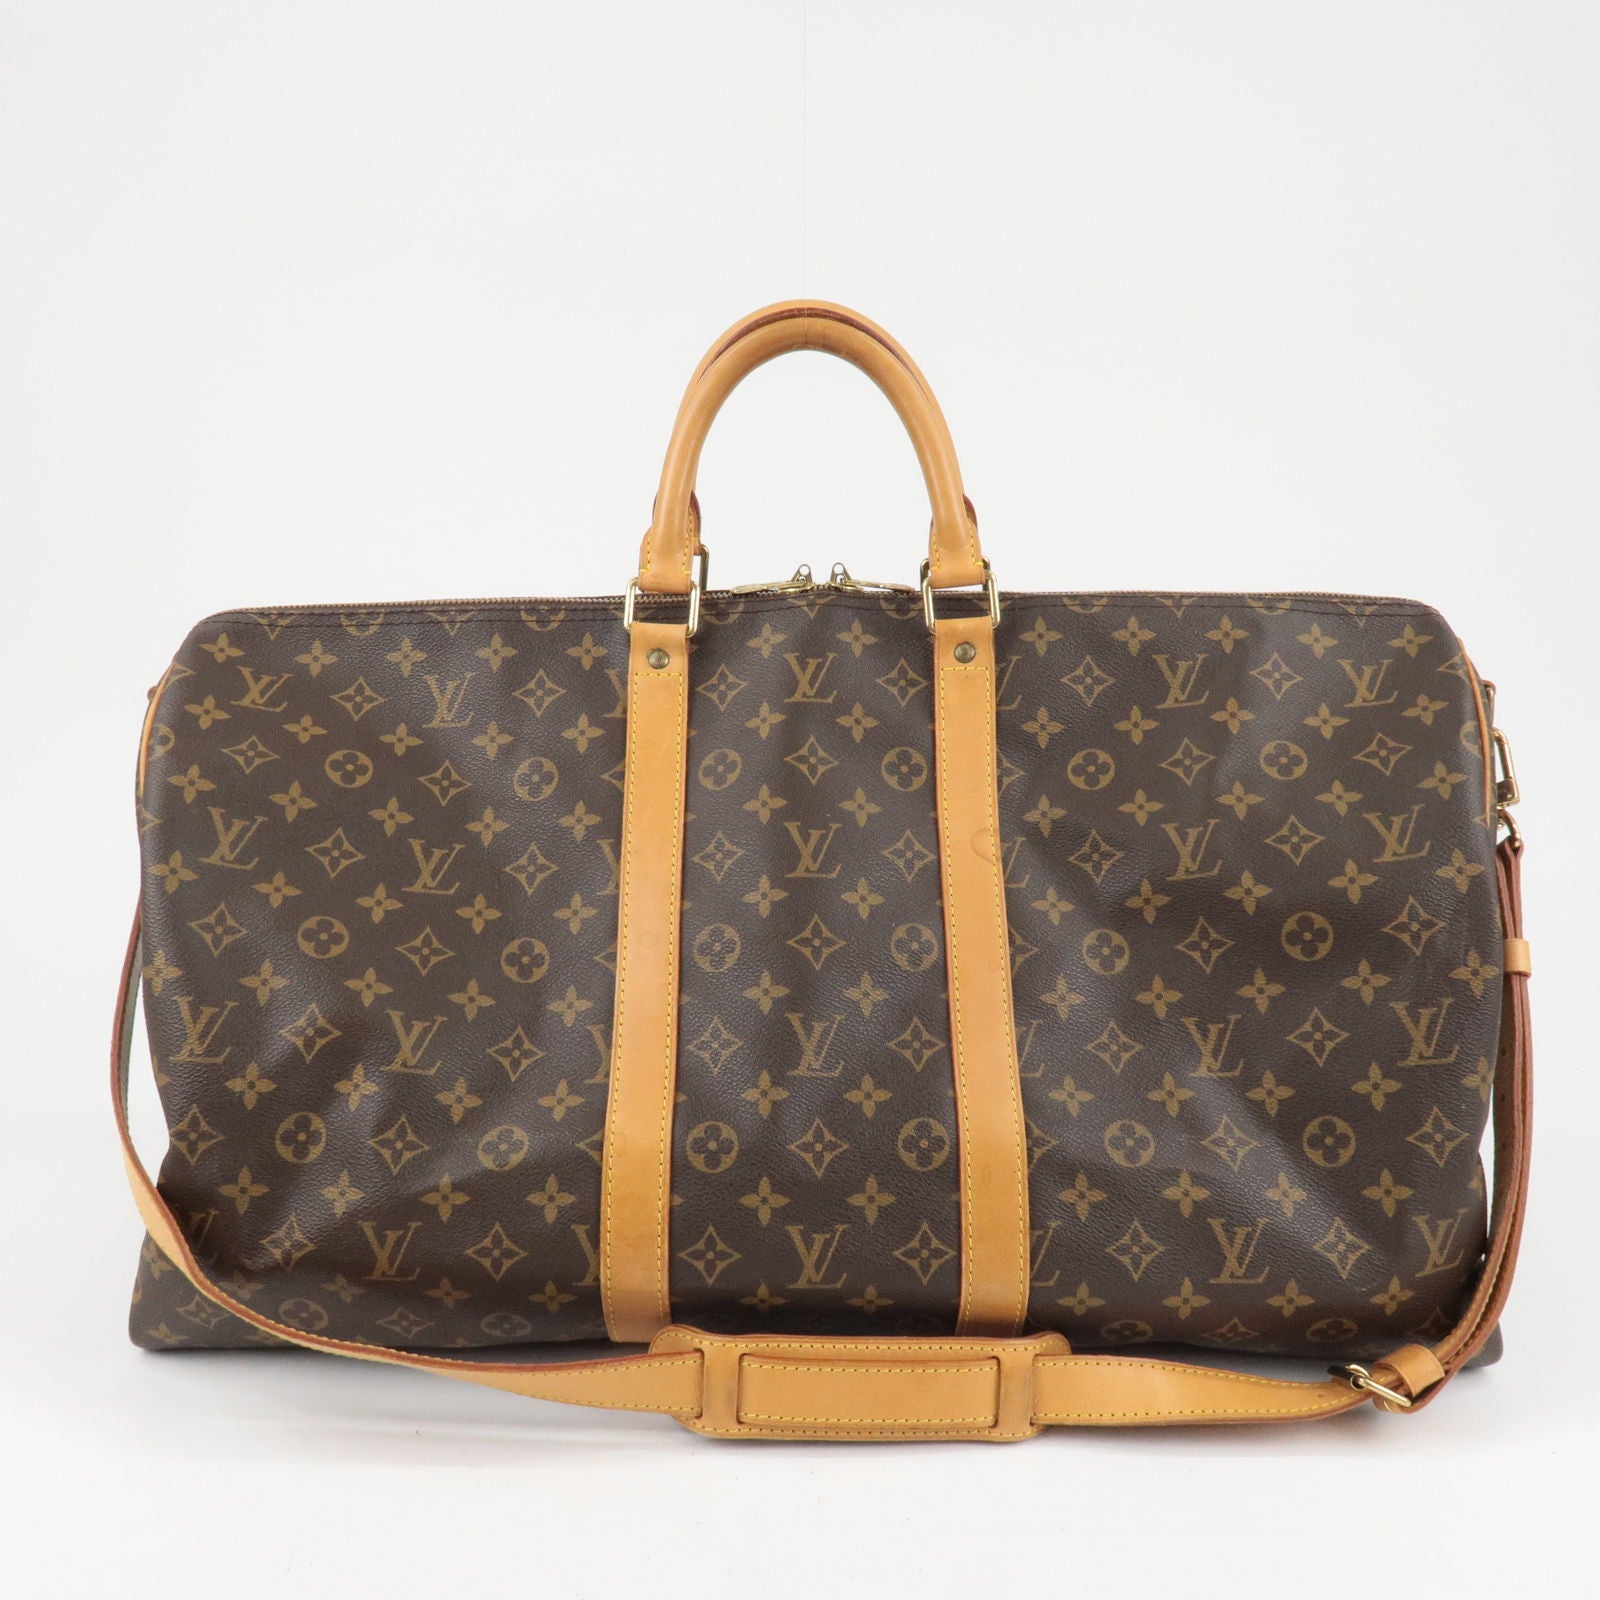 Monogram - M41414 – Louis Vuitton Damier Pegase 45 Luggage Carry On Bag  N23293 - 55 - Boston - Vuitton - Keep - Bandouliere - All - Bag - echarpe  foulard louis vuitton - Louis